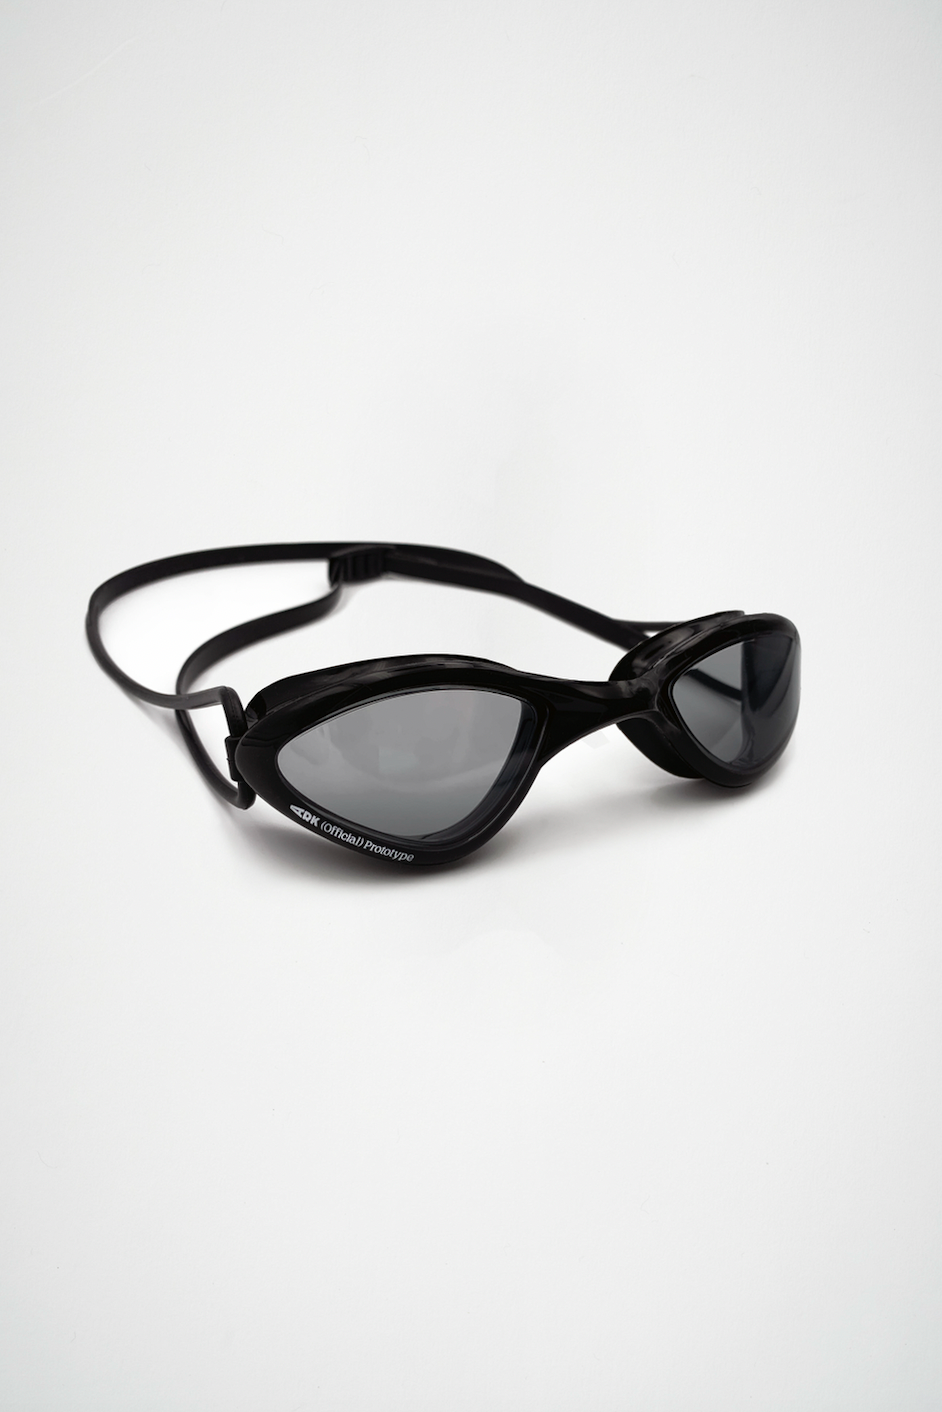 ARK Swim Goggles LTD Black